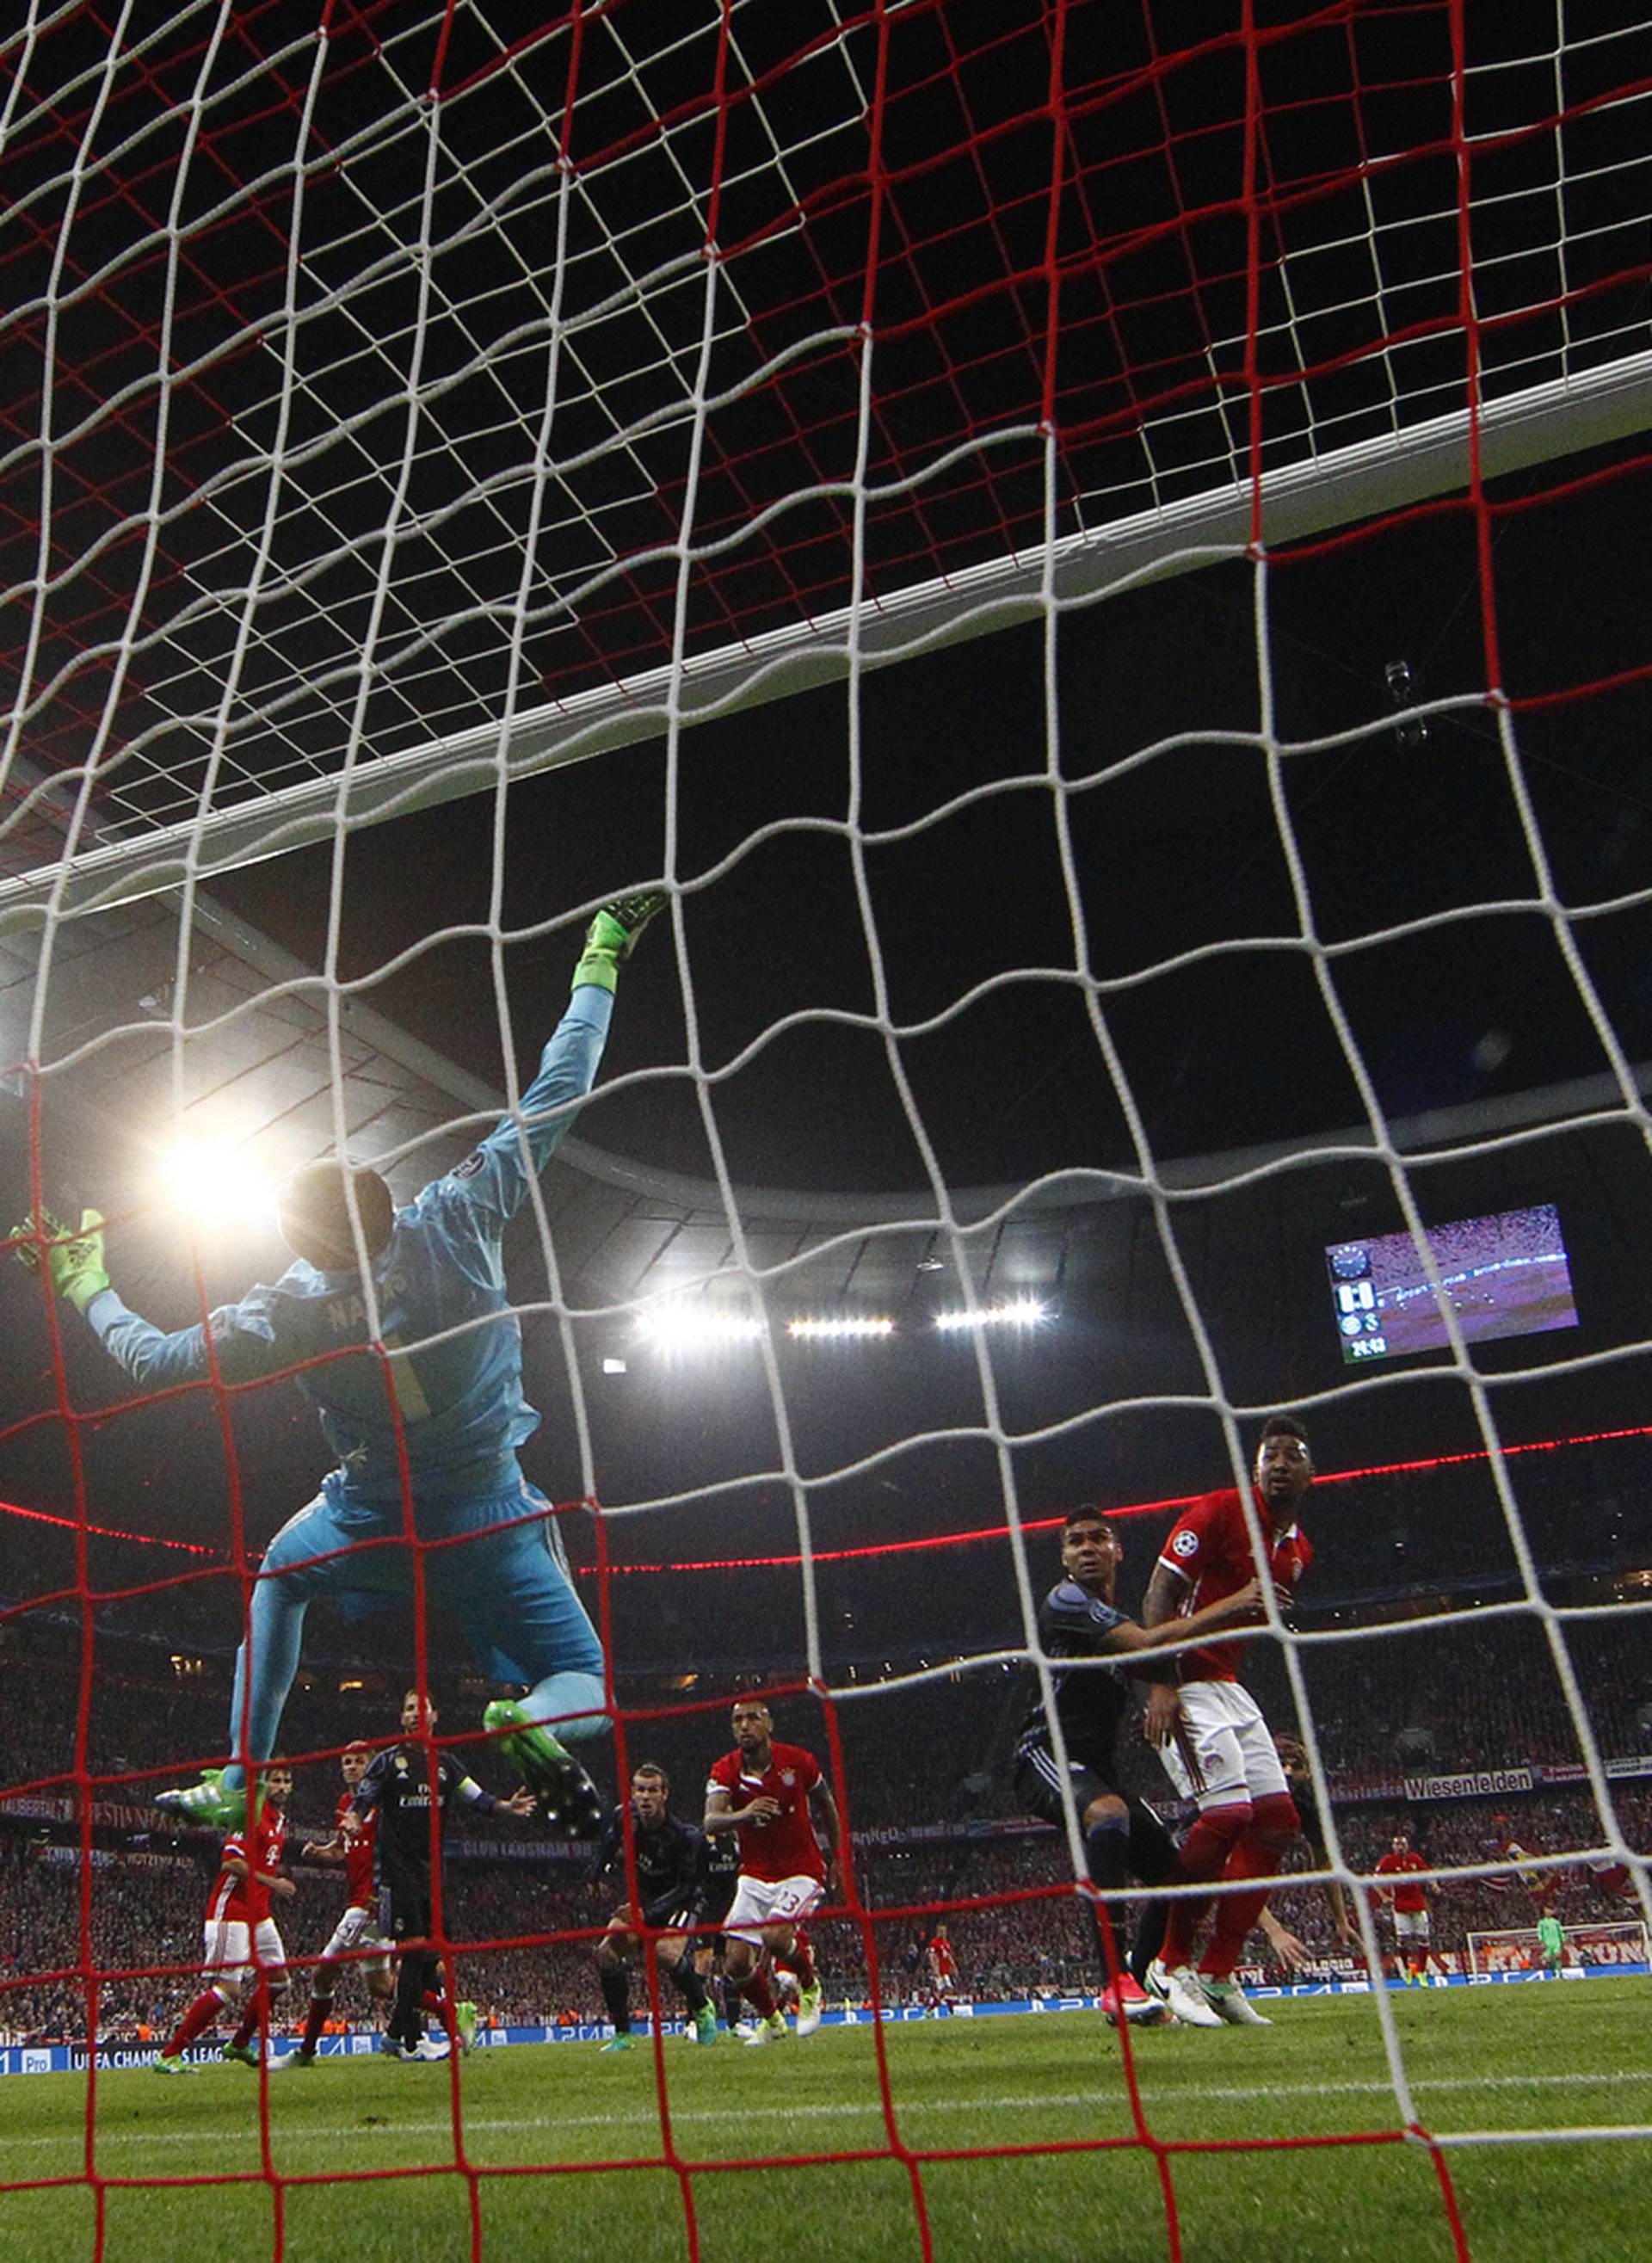 Bayern Munich's Arturo Vidal scores their first goal past Real Madrid's Keylor Navas